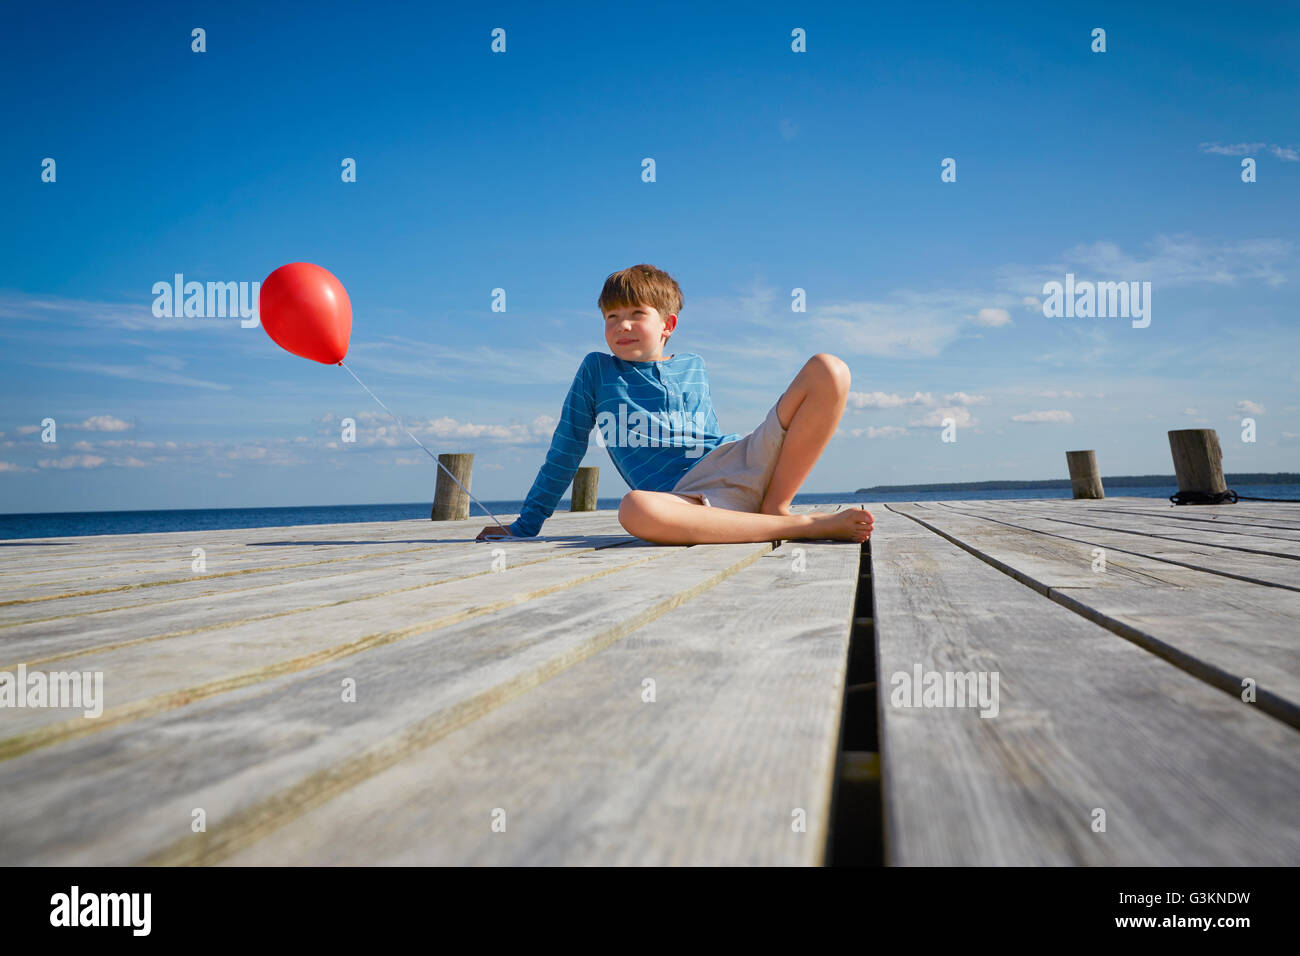 Junge auf Holzsteg, sitzen mit roten Helium-Ballon Stockfoto